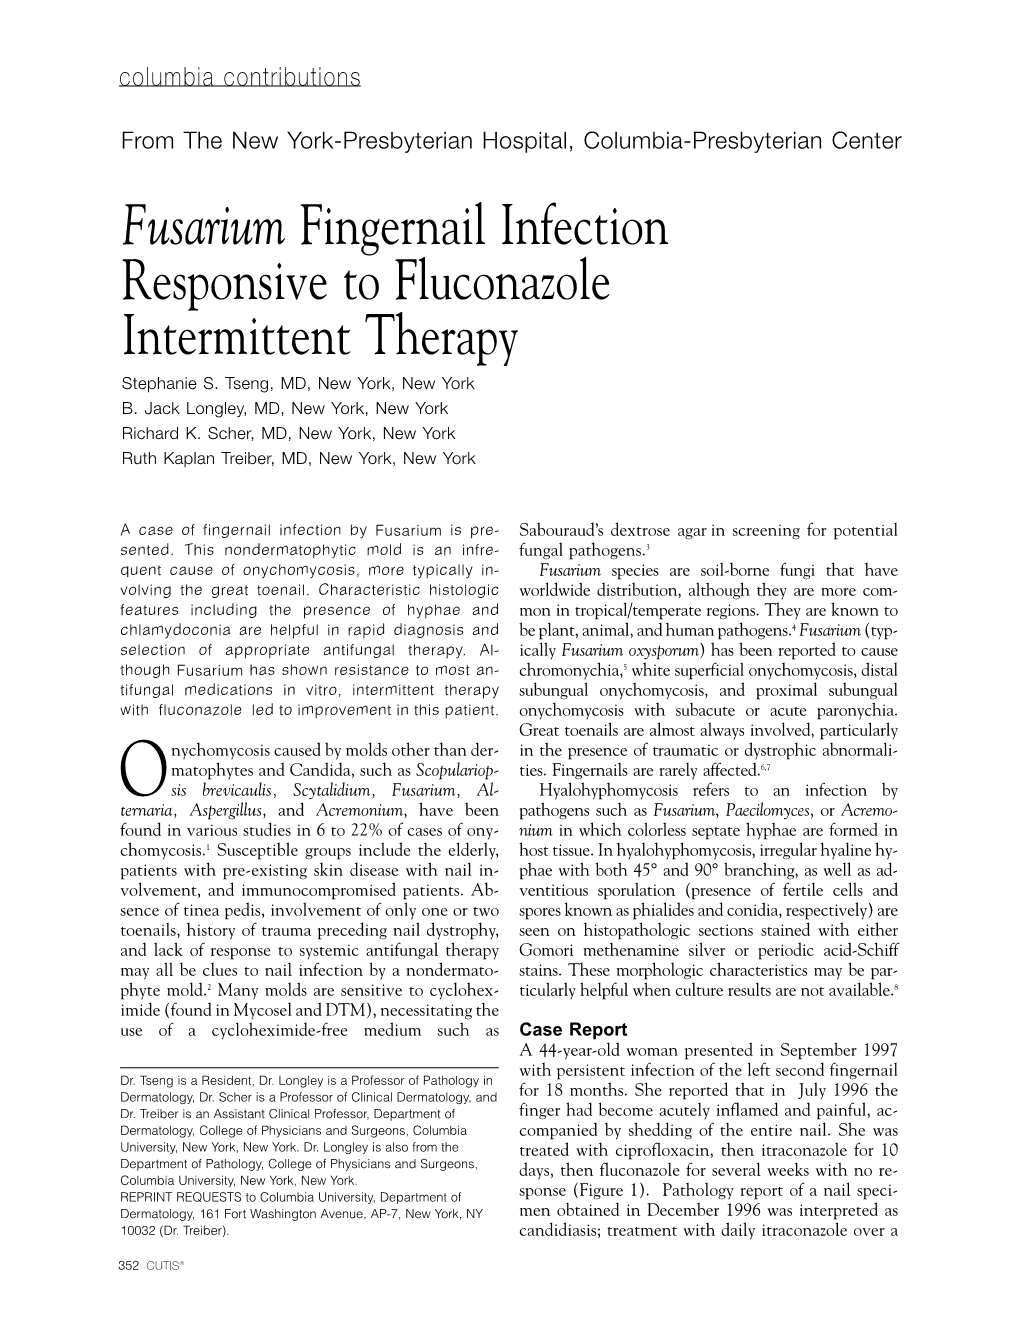 Fusarium Fingernail Infection Responsive to Fluconazole Intermittent Therapy Stephanie S